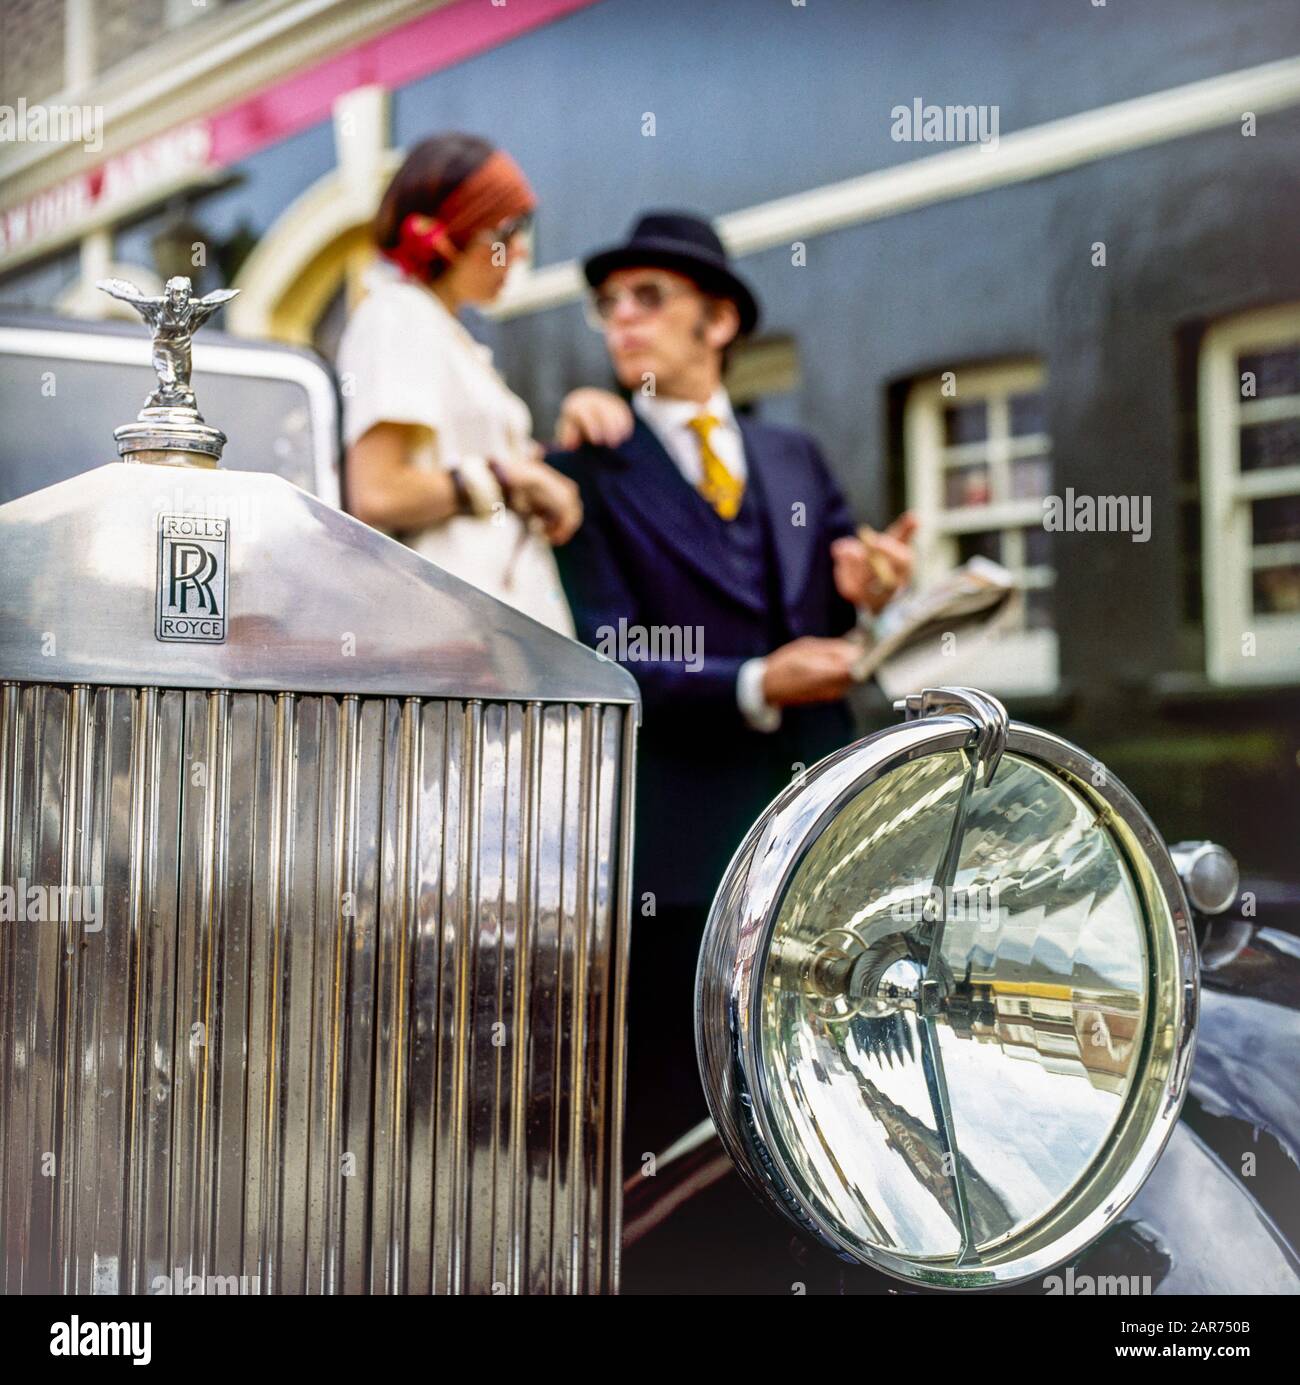 London 1970s, 1936 Rolls-Royce radiator grill, headlight, Spirit of Ecstasy statue, hood ornament, mascot, blurred elegant couple, England, UK, GB, Great Britain, Stock Photo